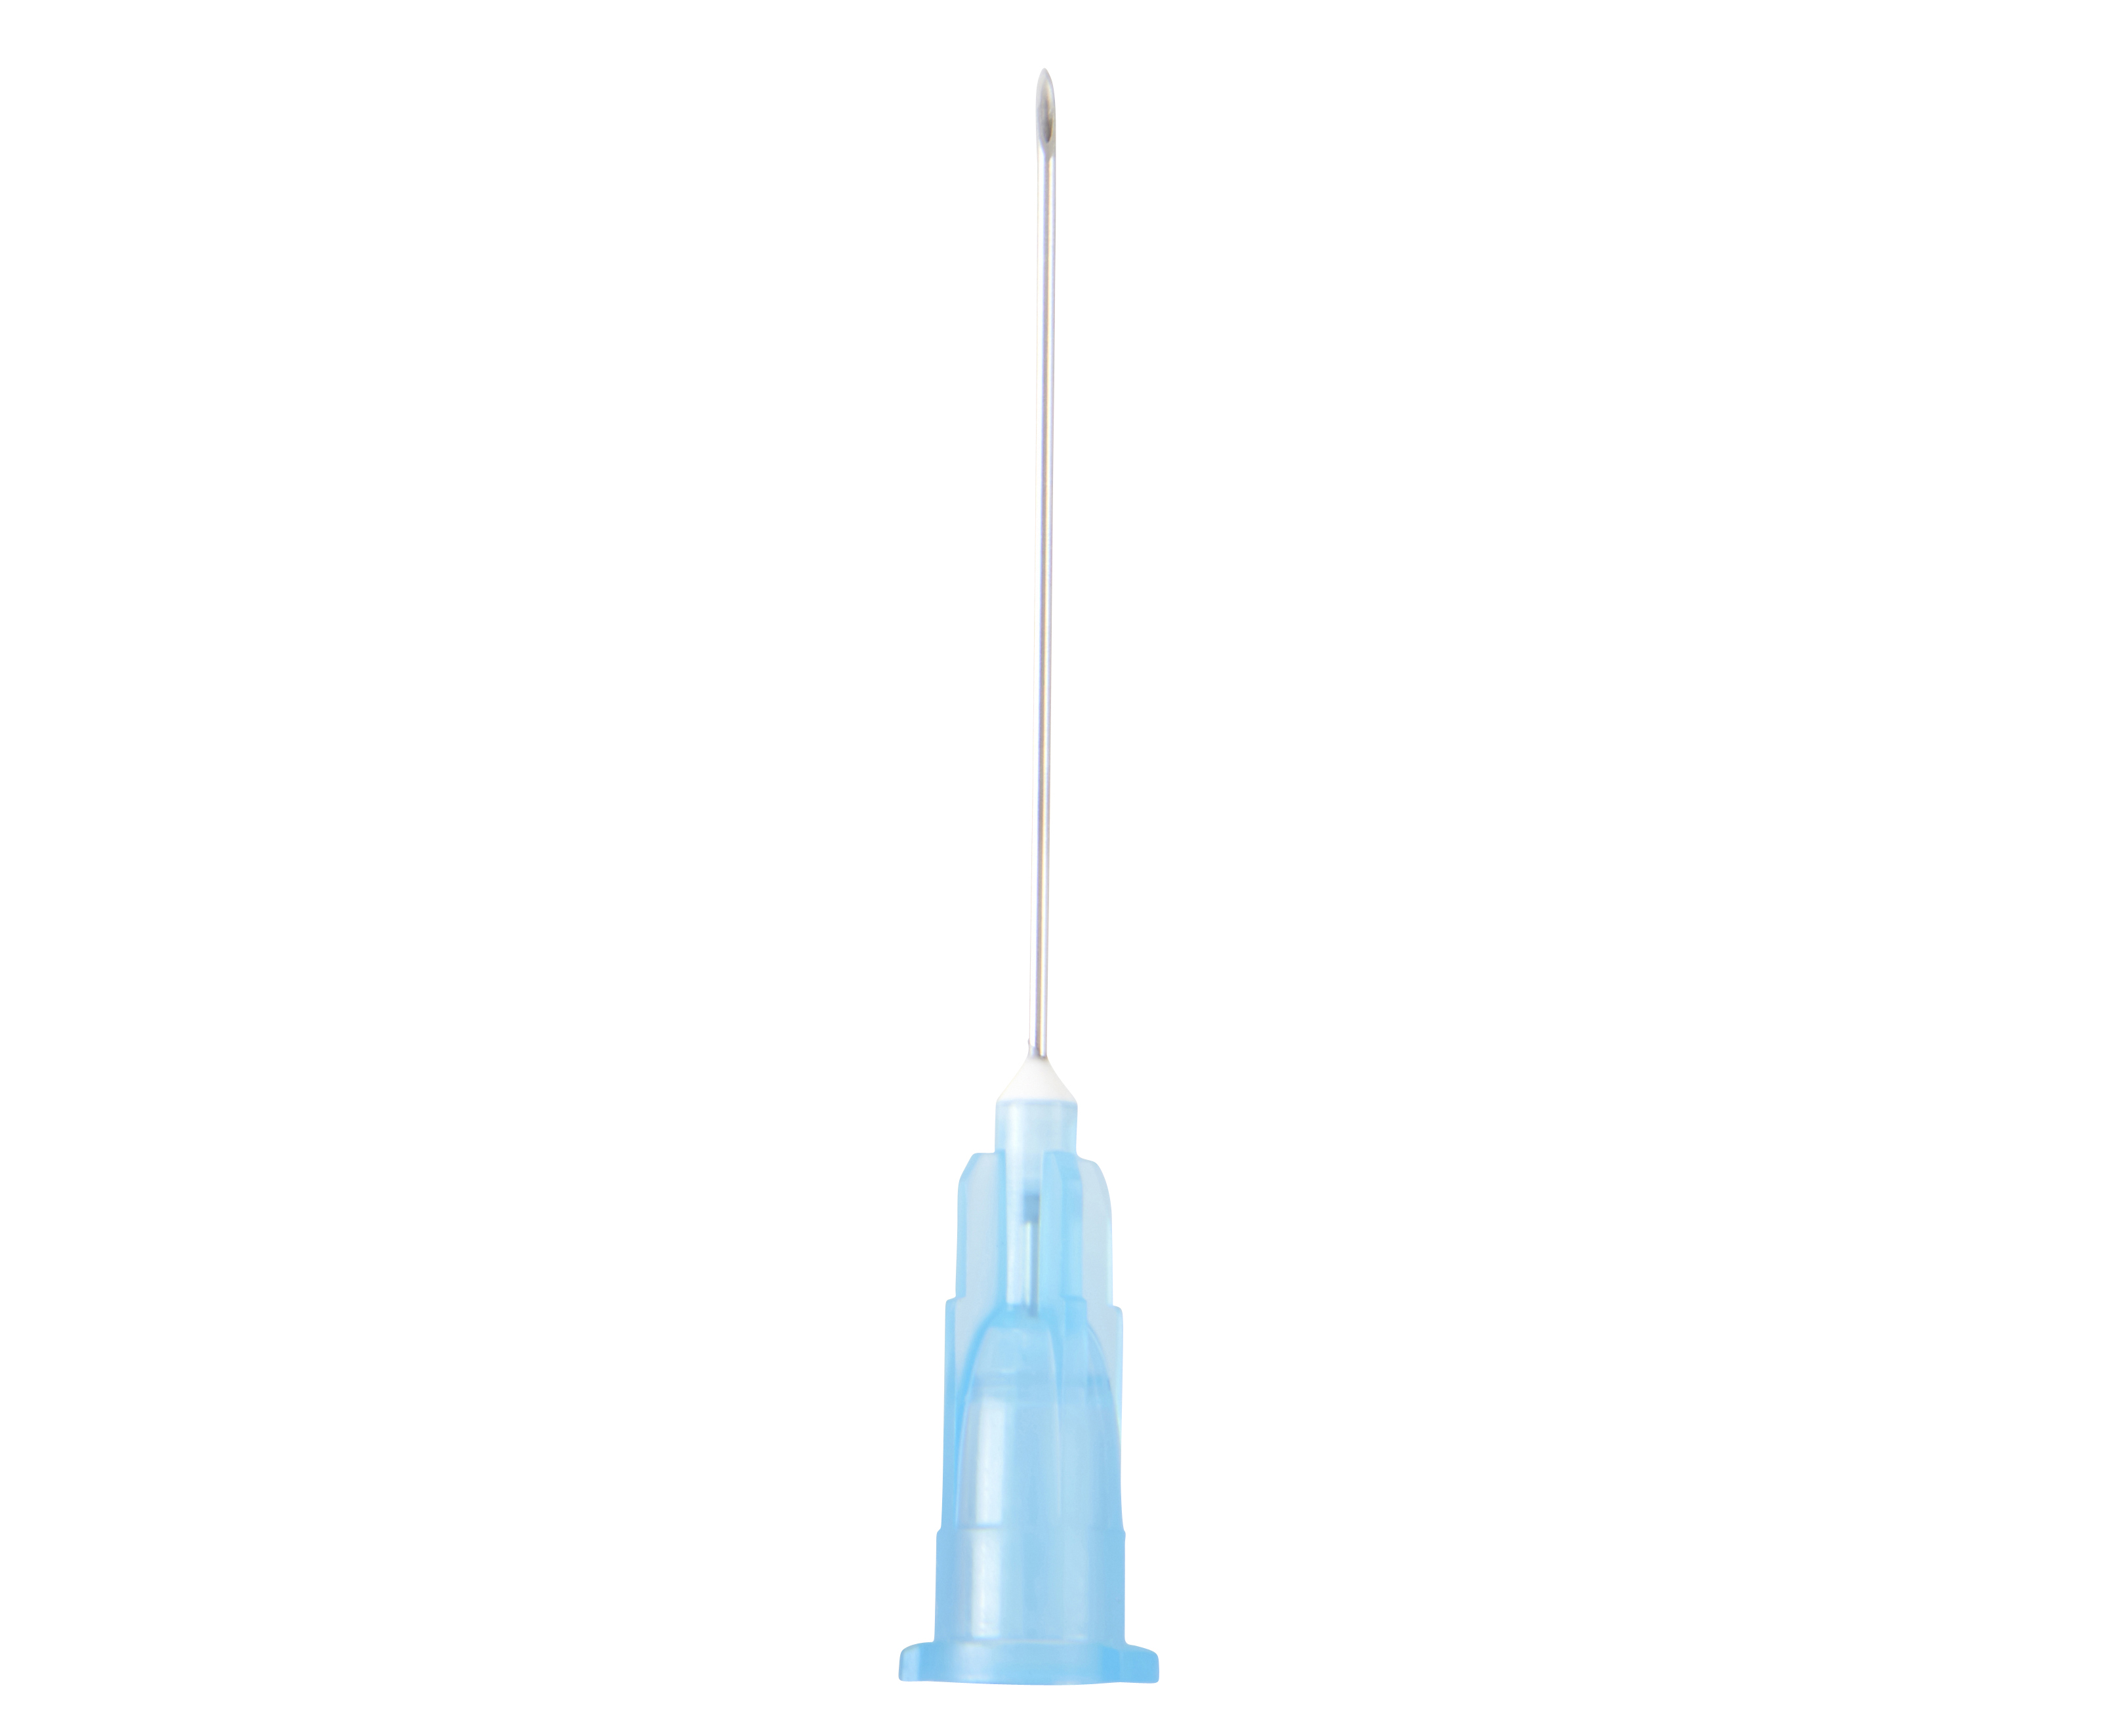 KRUUSE disposable needle 0.6x30 mm, 23Gx1 1/4, blue, 100/pk